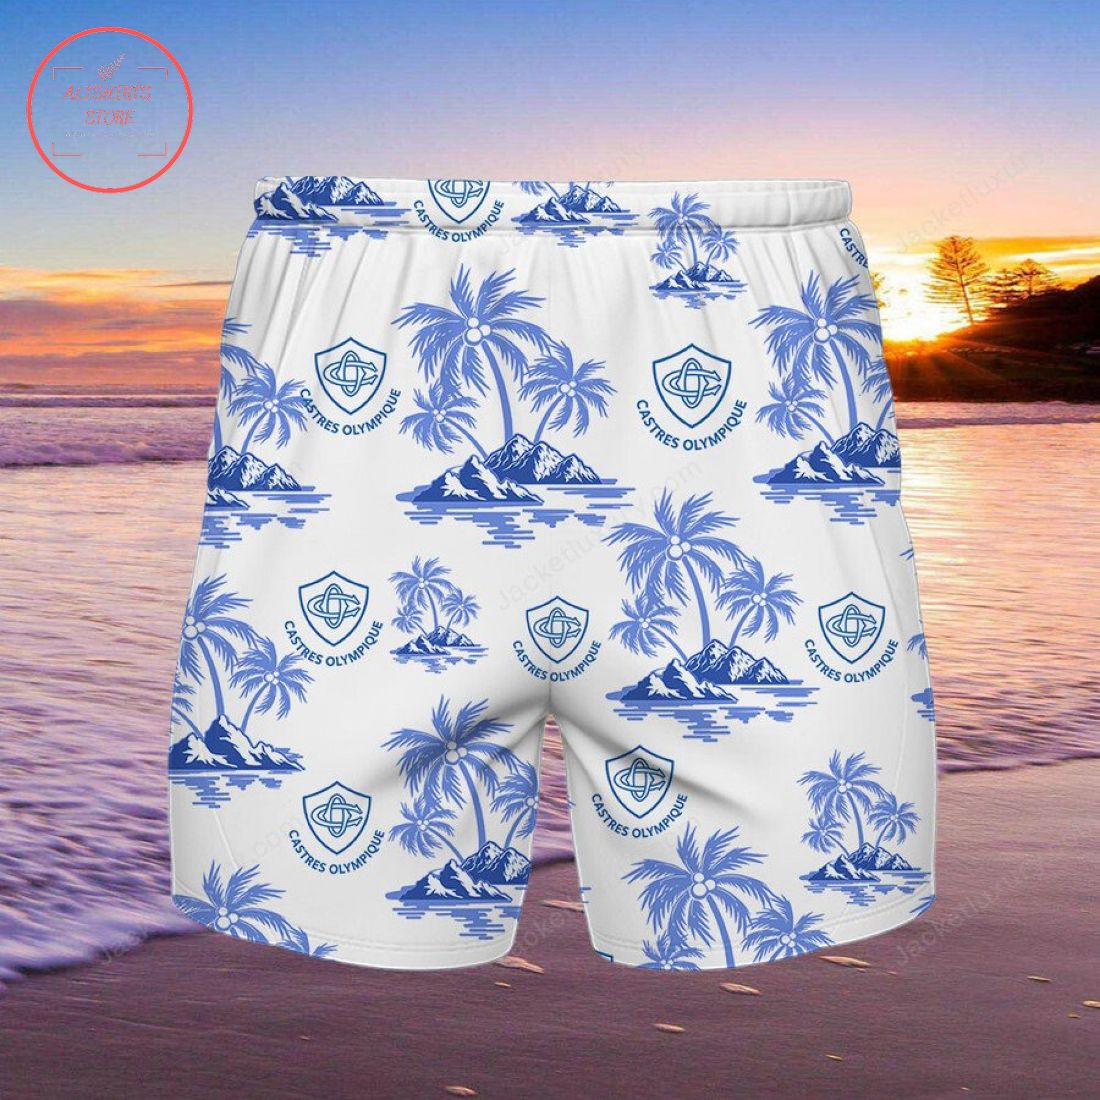 Castres Olympique Hawaiian shirt and beach shorts